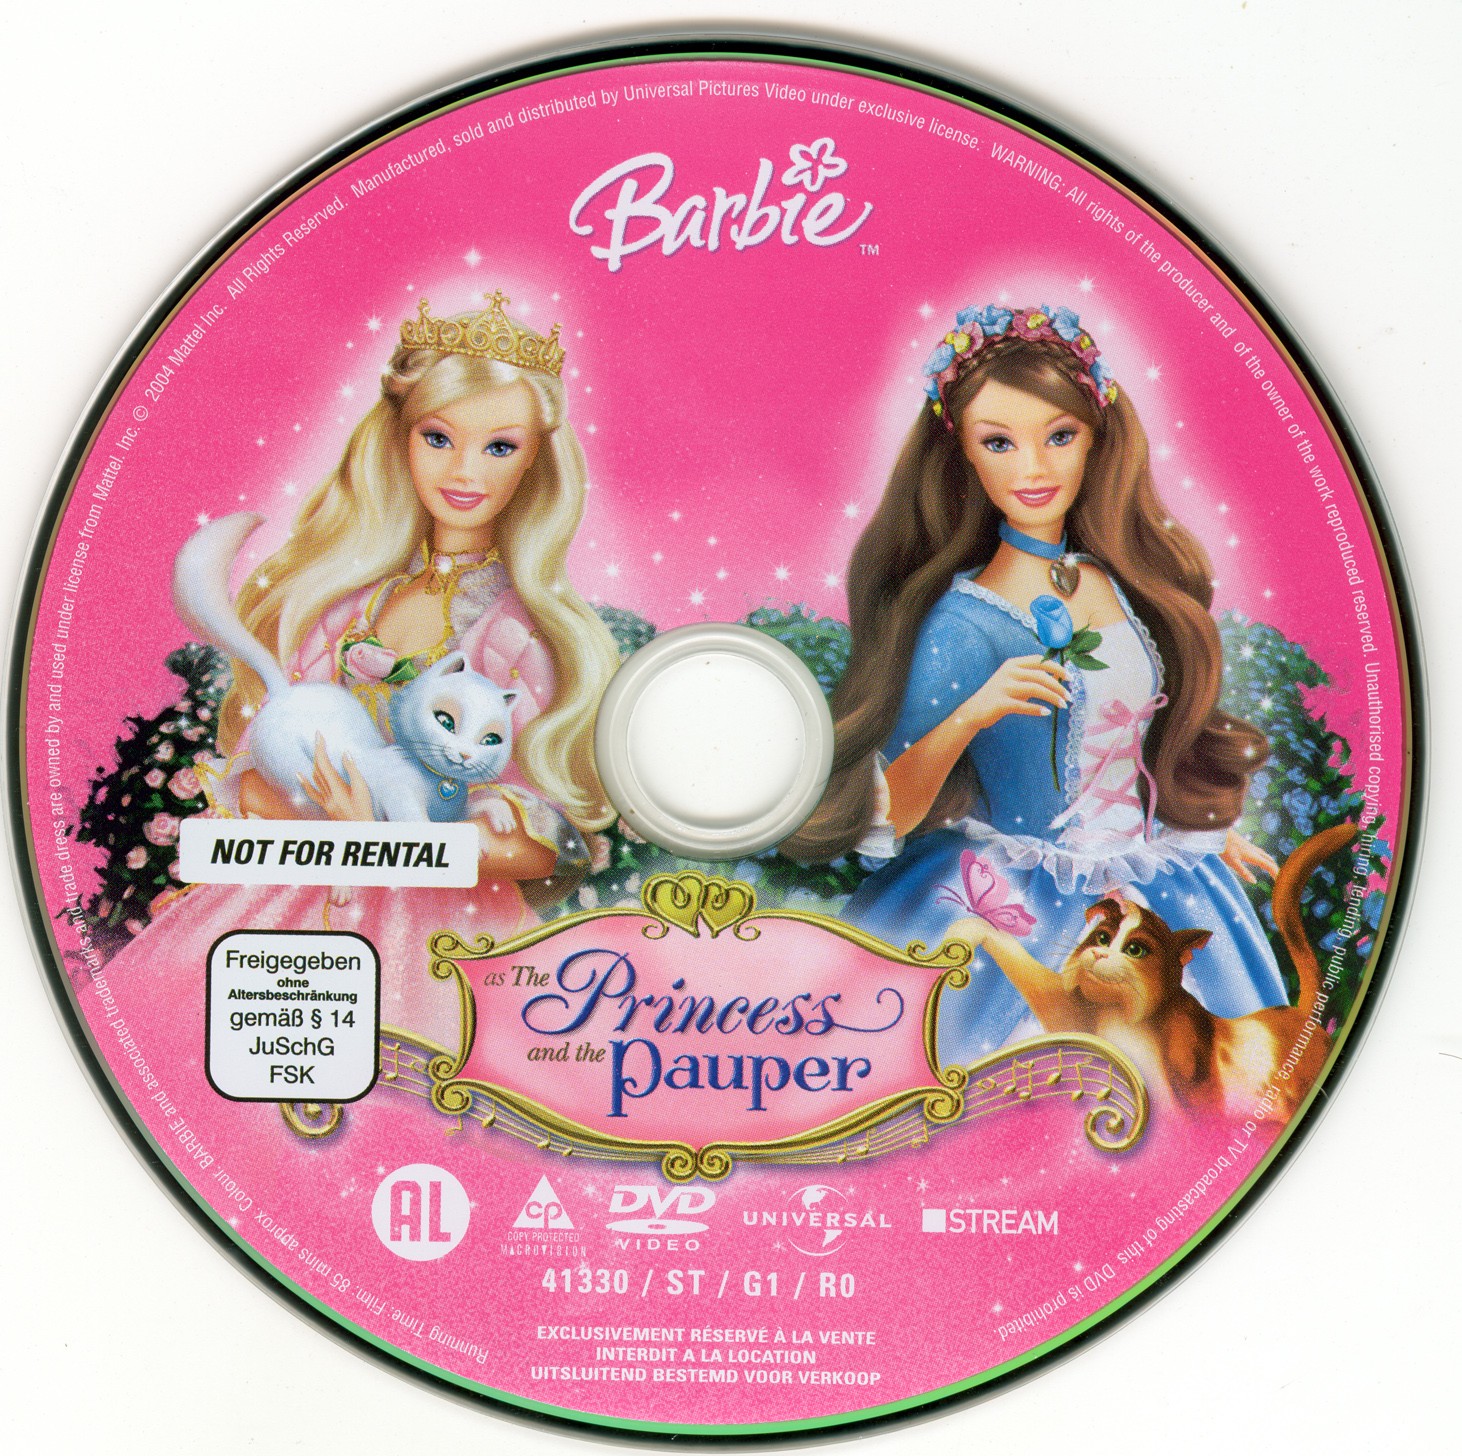 film barbie coeur de princesse streaming